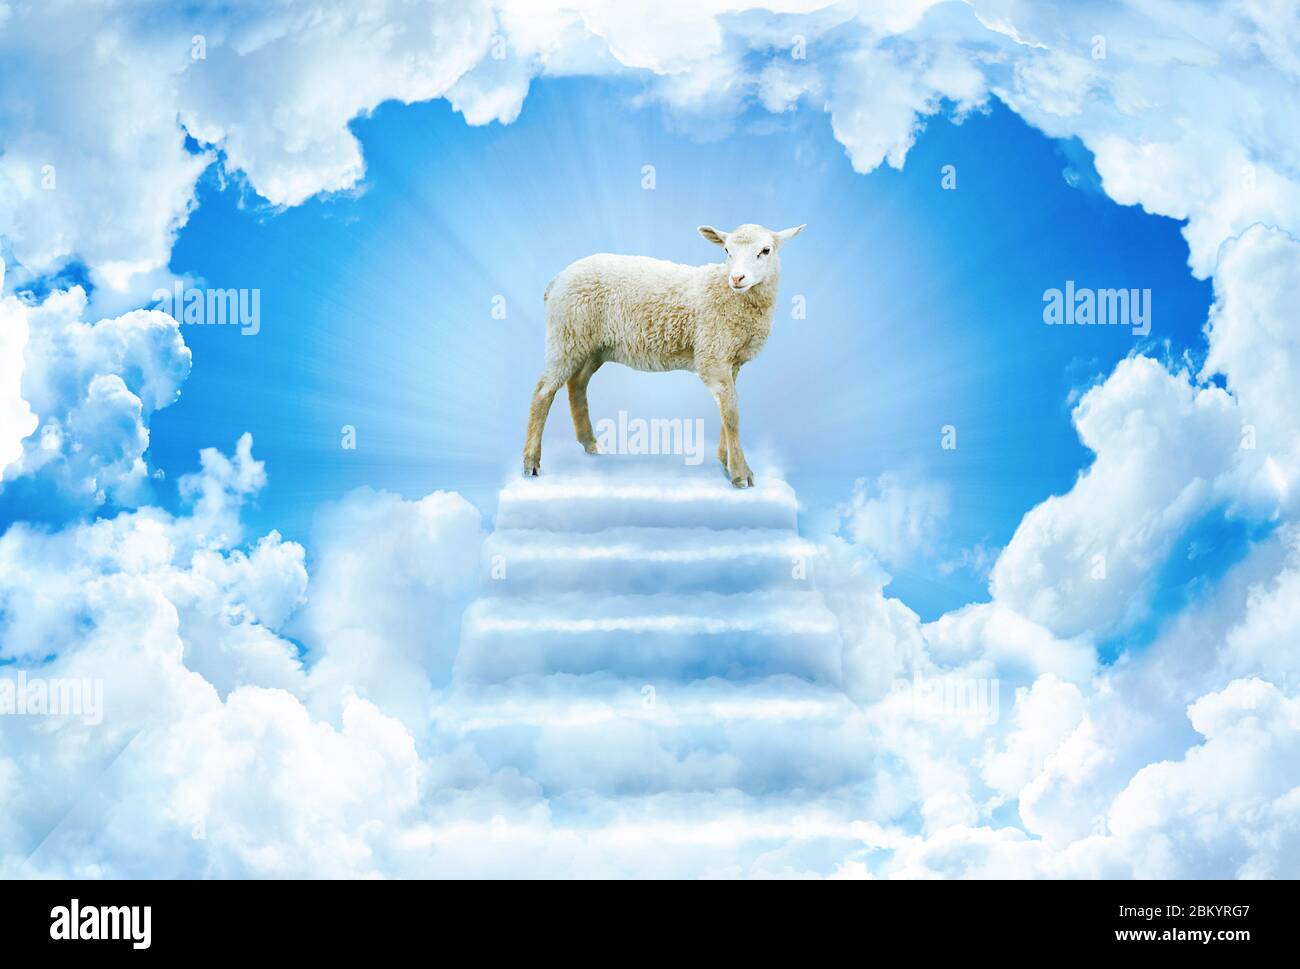 Fest der Sacrif. Schafe auf Wolke Treppe. Eid al-Adha Mubarak. Fest des Opfers Gruß. Türkisch: Kurban Bayraminiz Kutlu Olsun Stockfoto